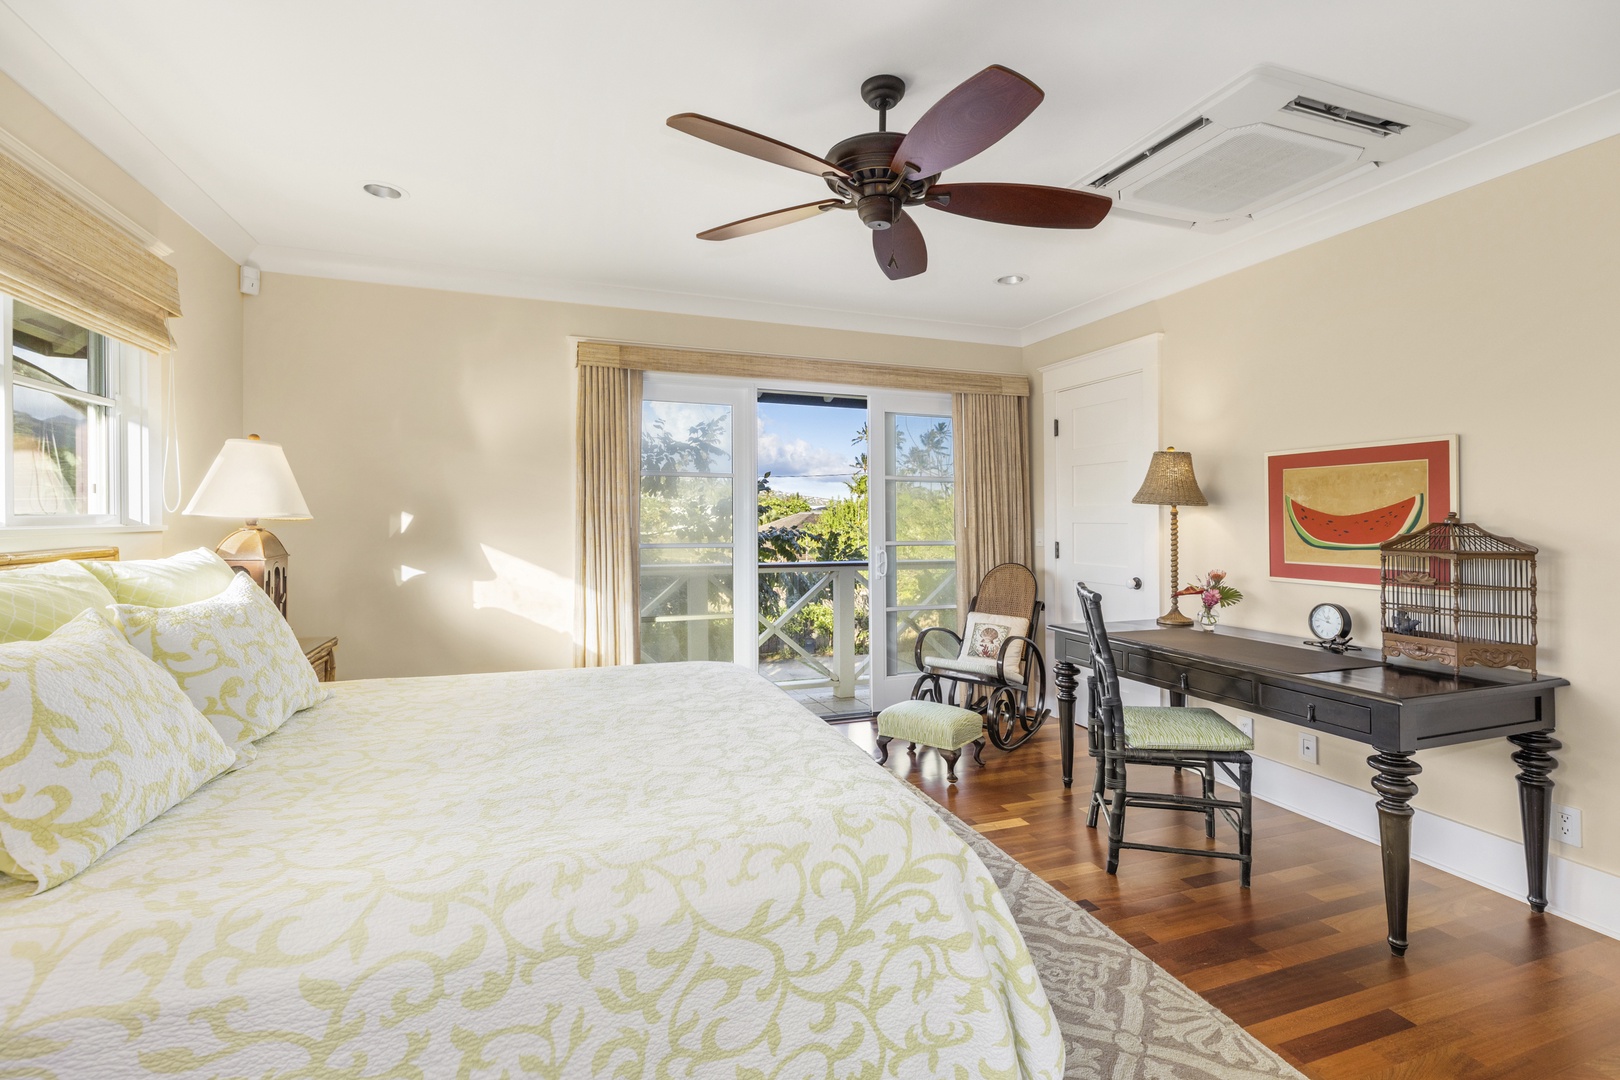 Honolulu Vacation Rentals, Kahala Beachside Estate - Carriage House bedroom, with lanai access